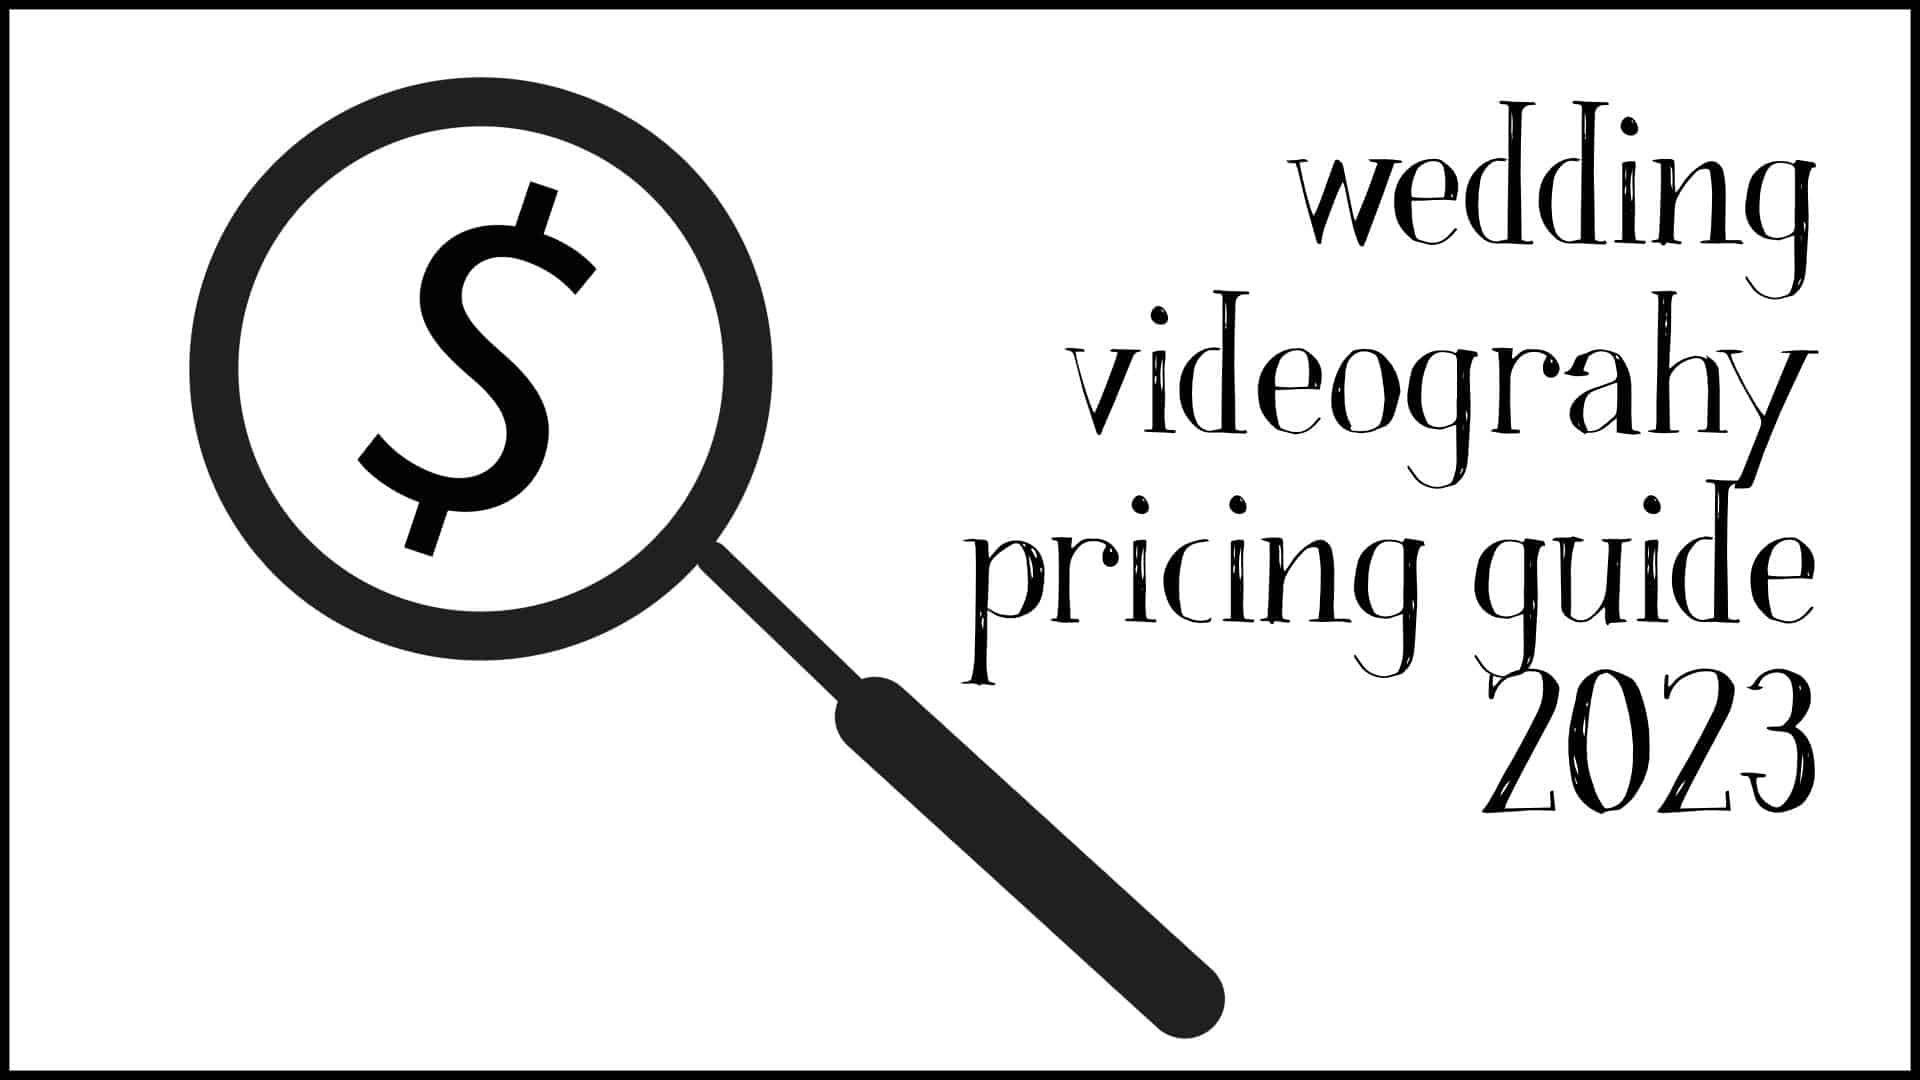 Brisbane Wedding videography pricing guide 2023